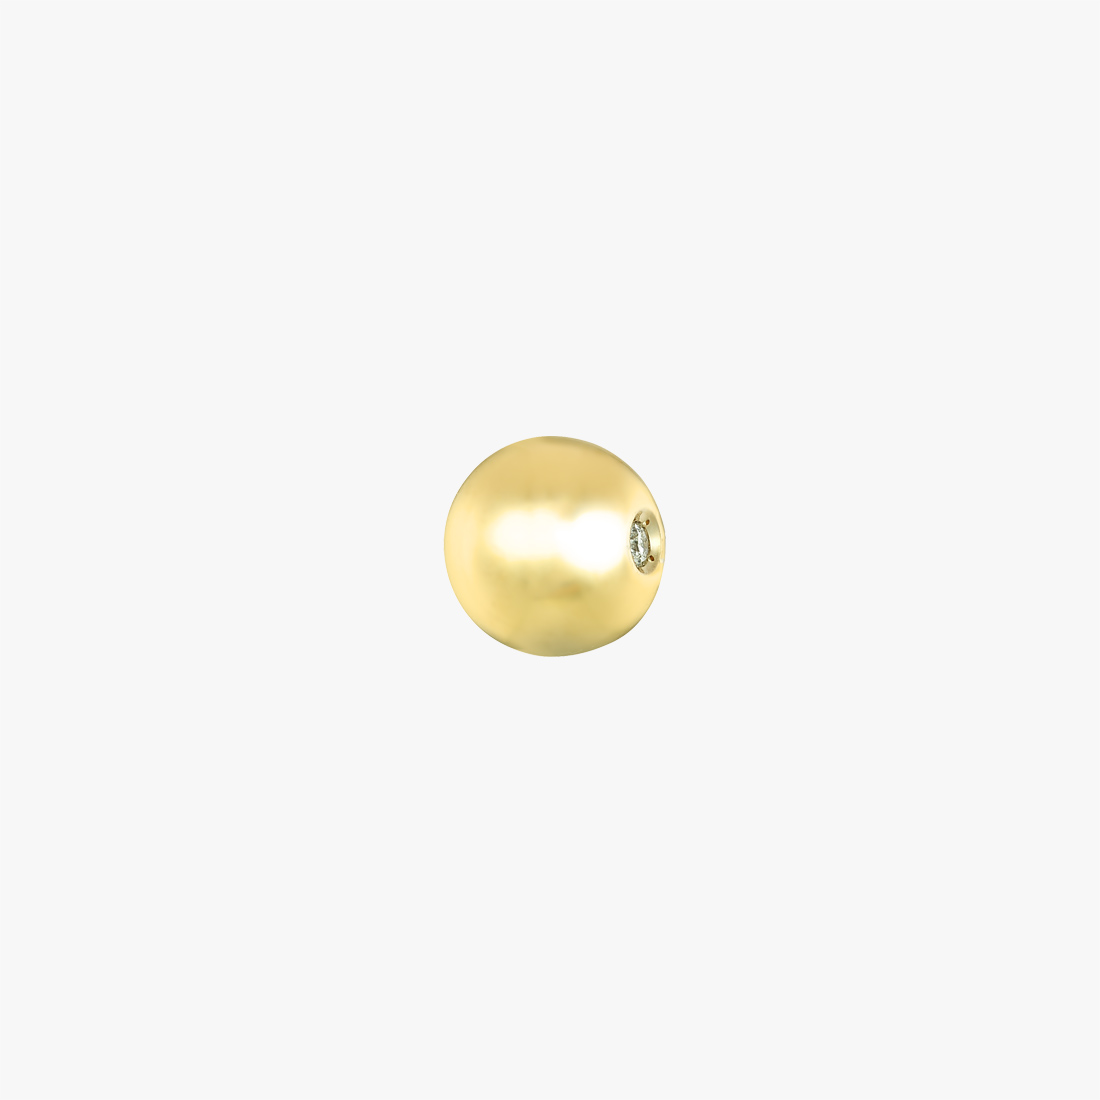 【SJX W】DIAMOND ROUND PIERCED EARRING, , large